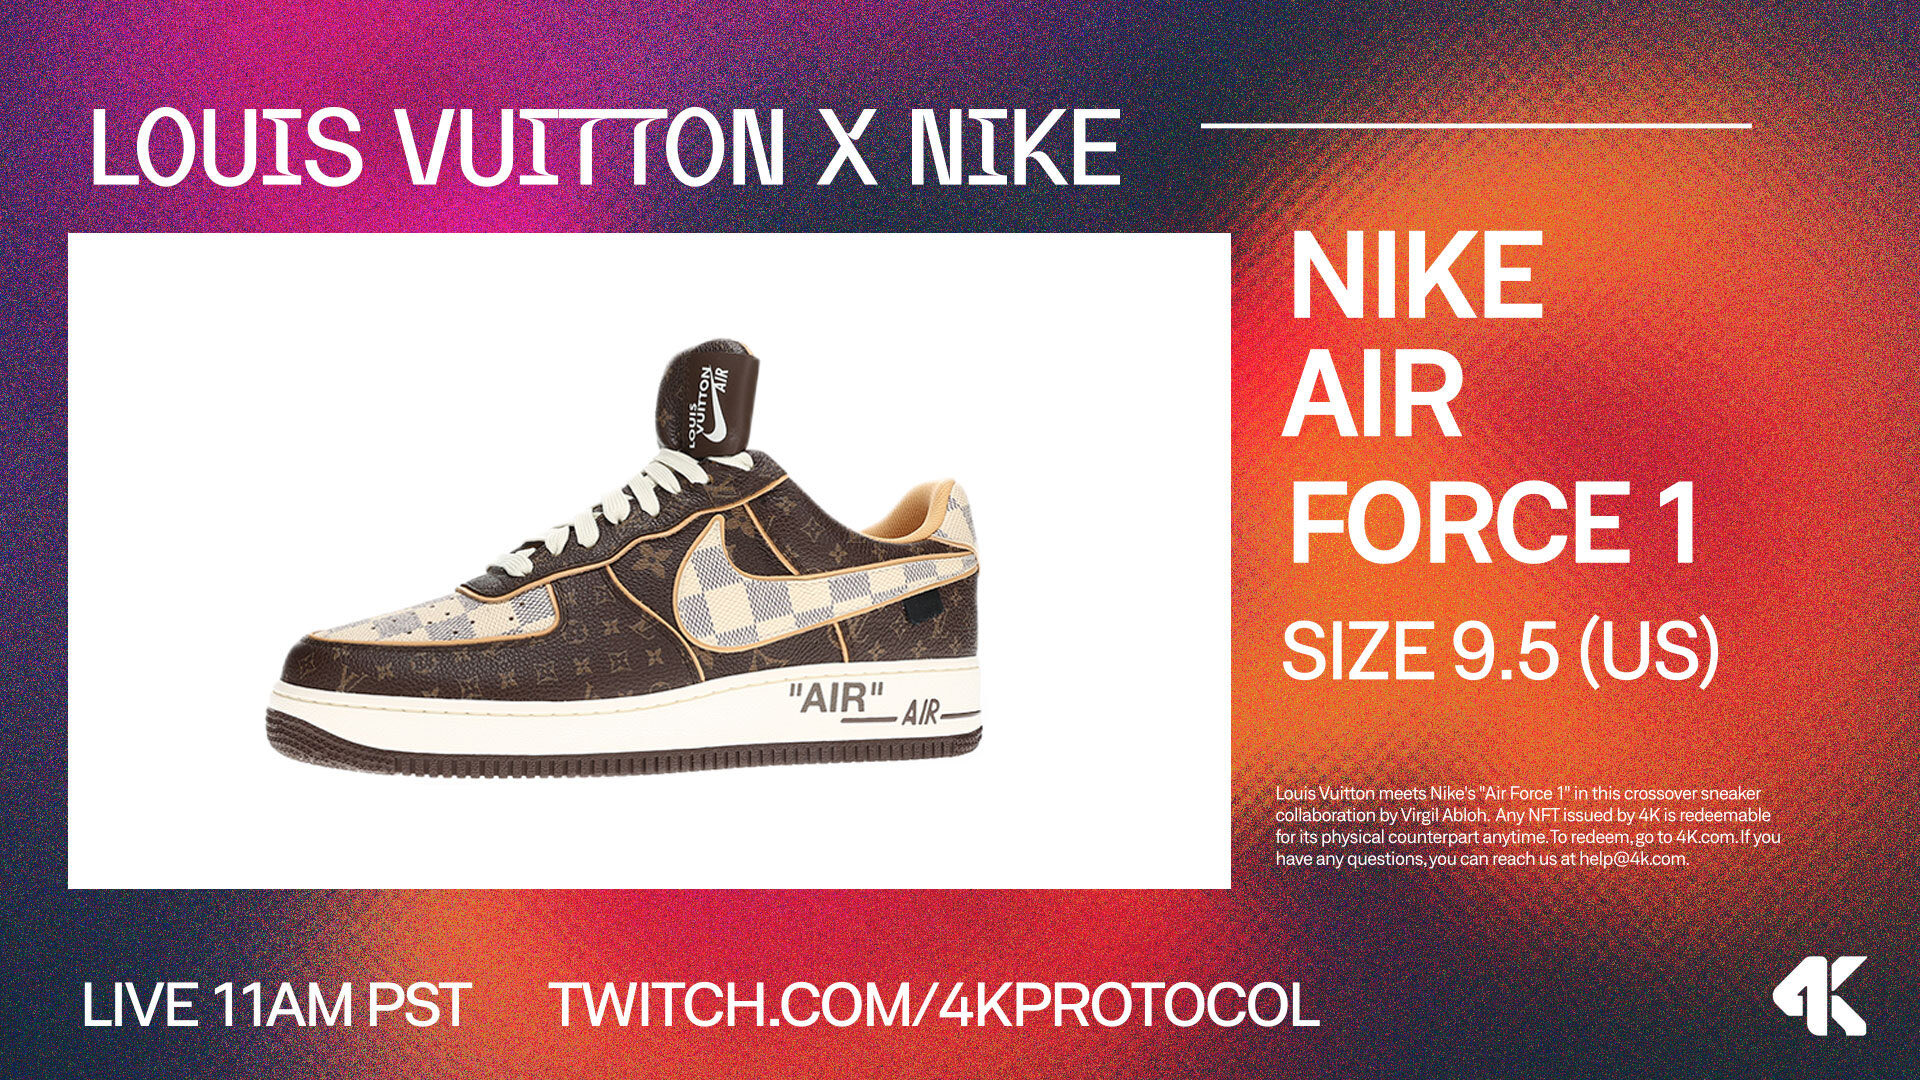 Nike x Louis Vuitton Air Force 1 Size 9.5